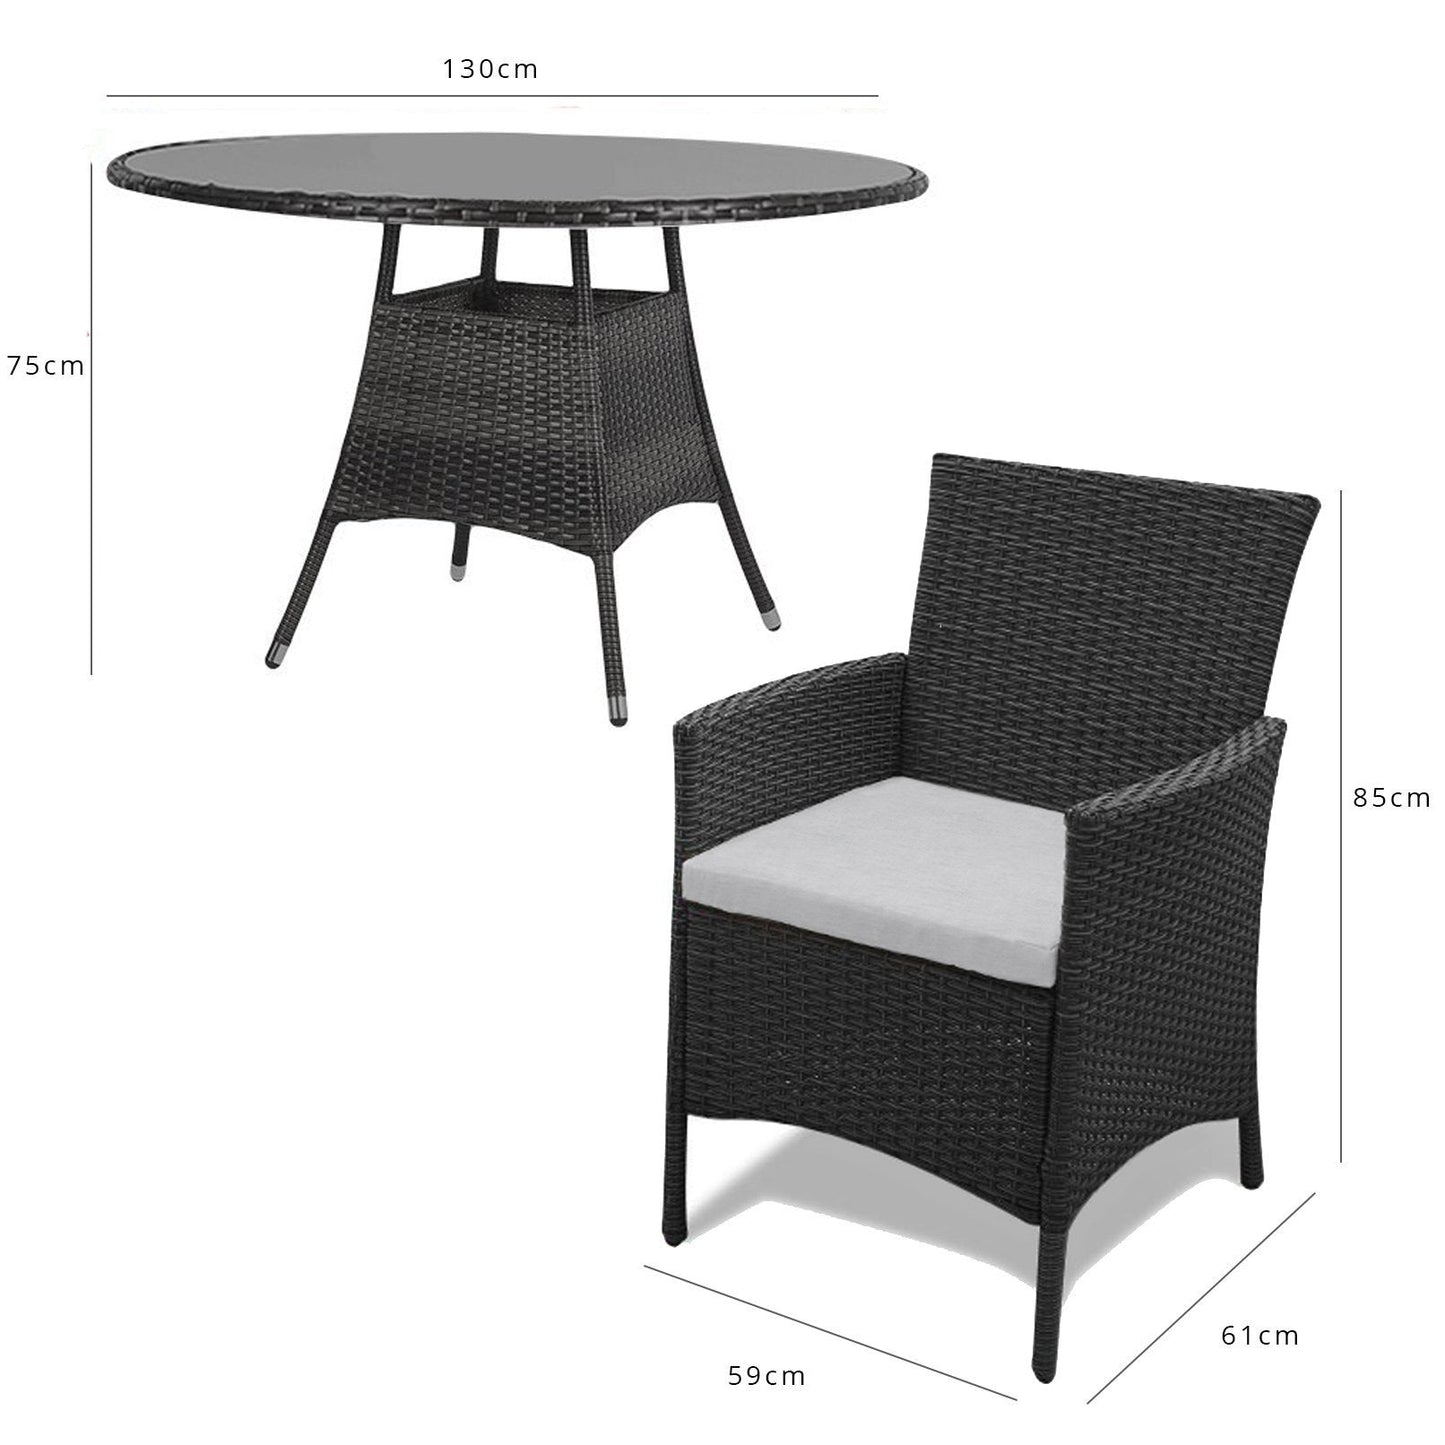 Kemble 6 Seater Rattan Round Dining Set with Parasol - Rattan Garden Furniture - Black